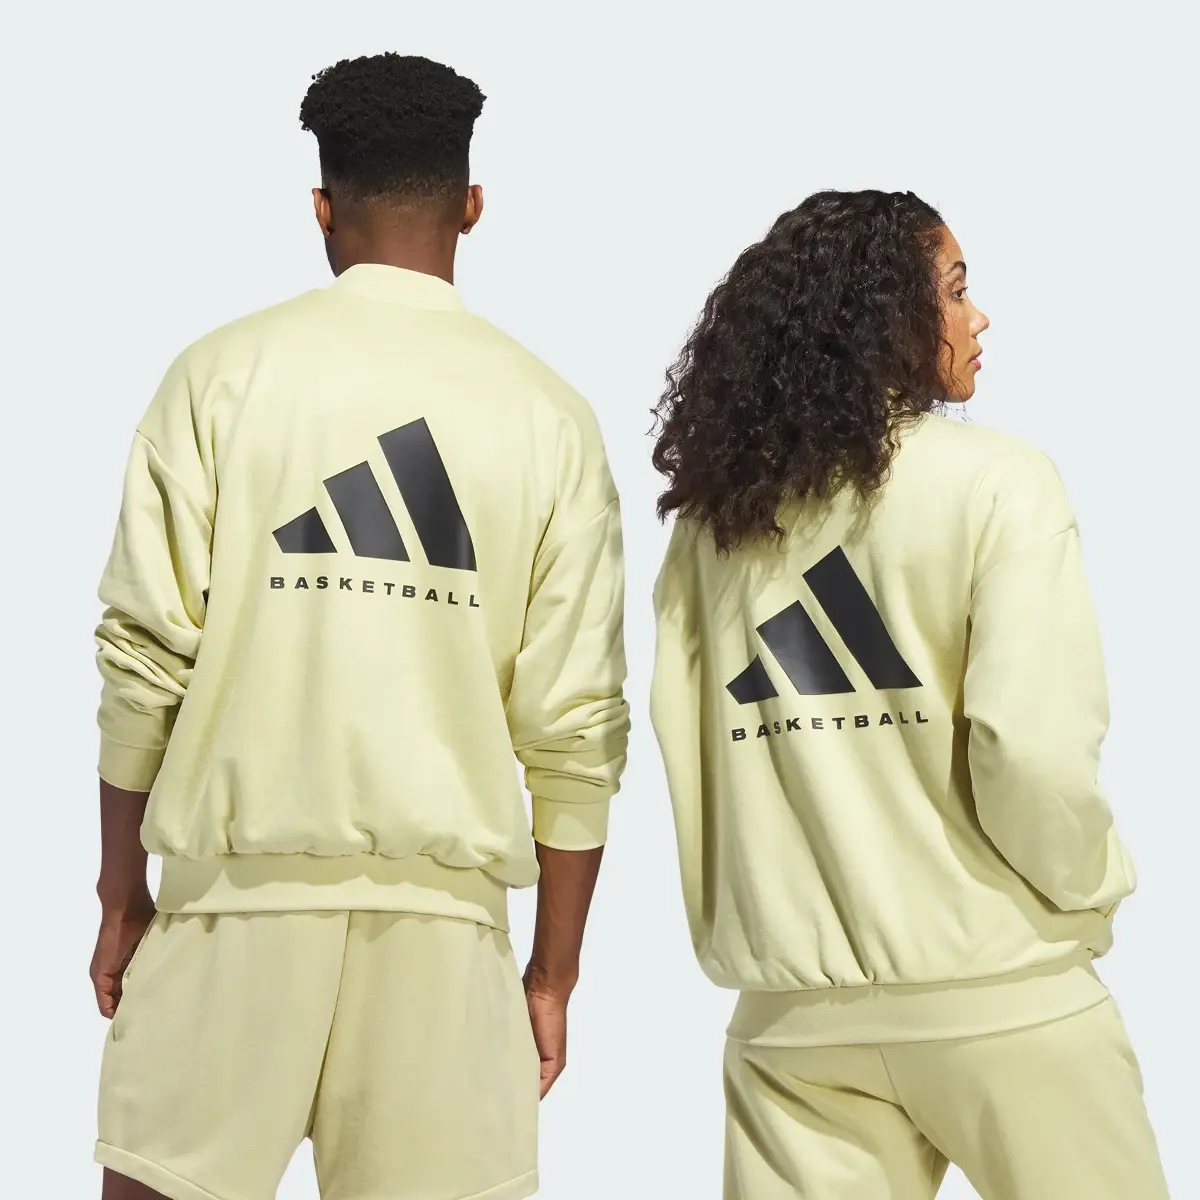 Adidas Basketball Sueded Crew Sweatshirt. 2